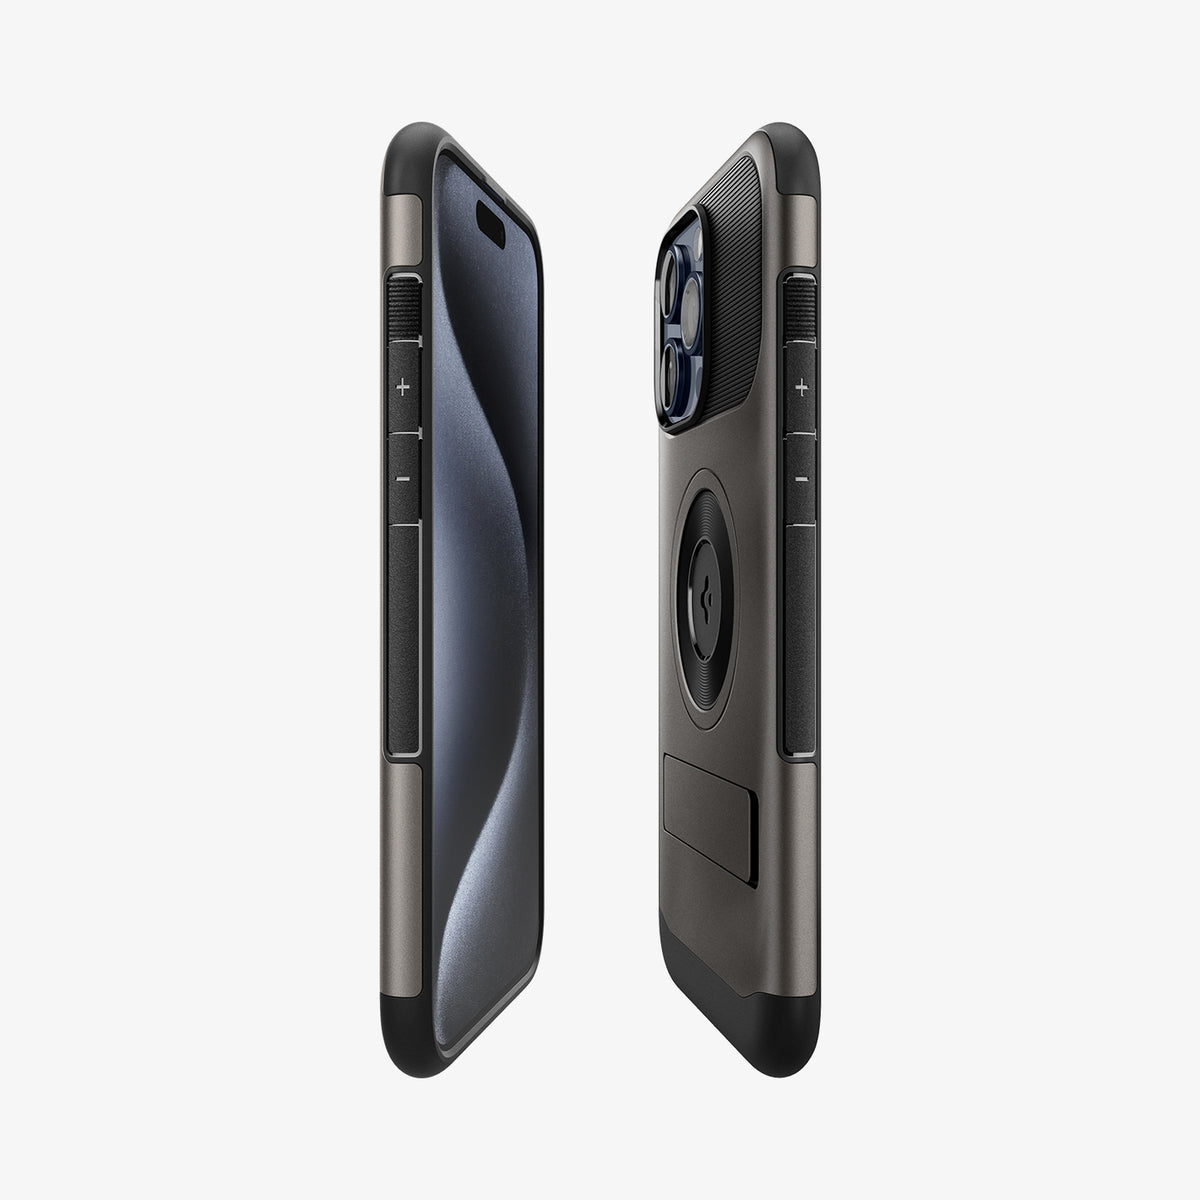 Spigen – Slim Armor Case for Apple iPhone 12 Pro Max – Gunmetal – CAN-AM IT  Solutions